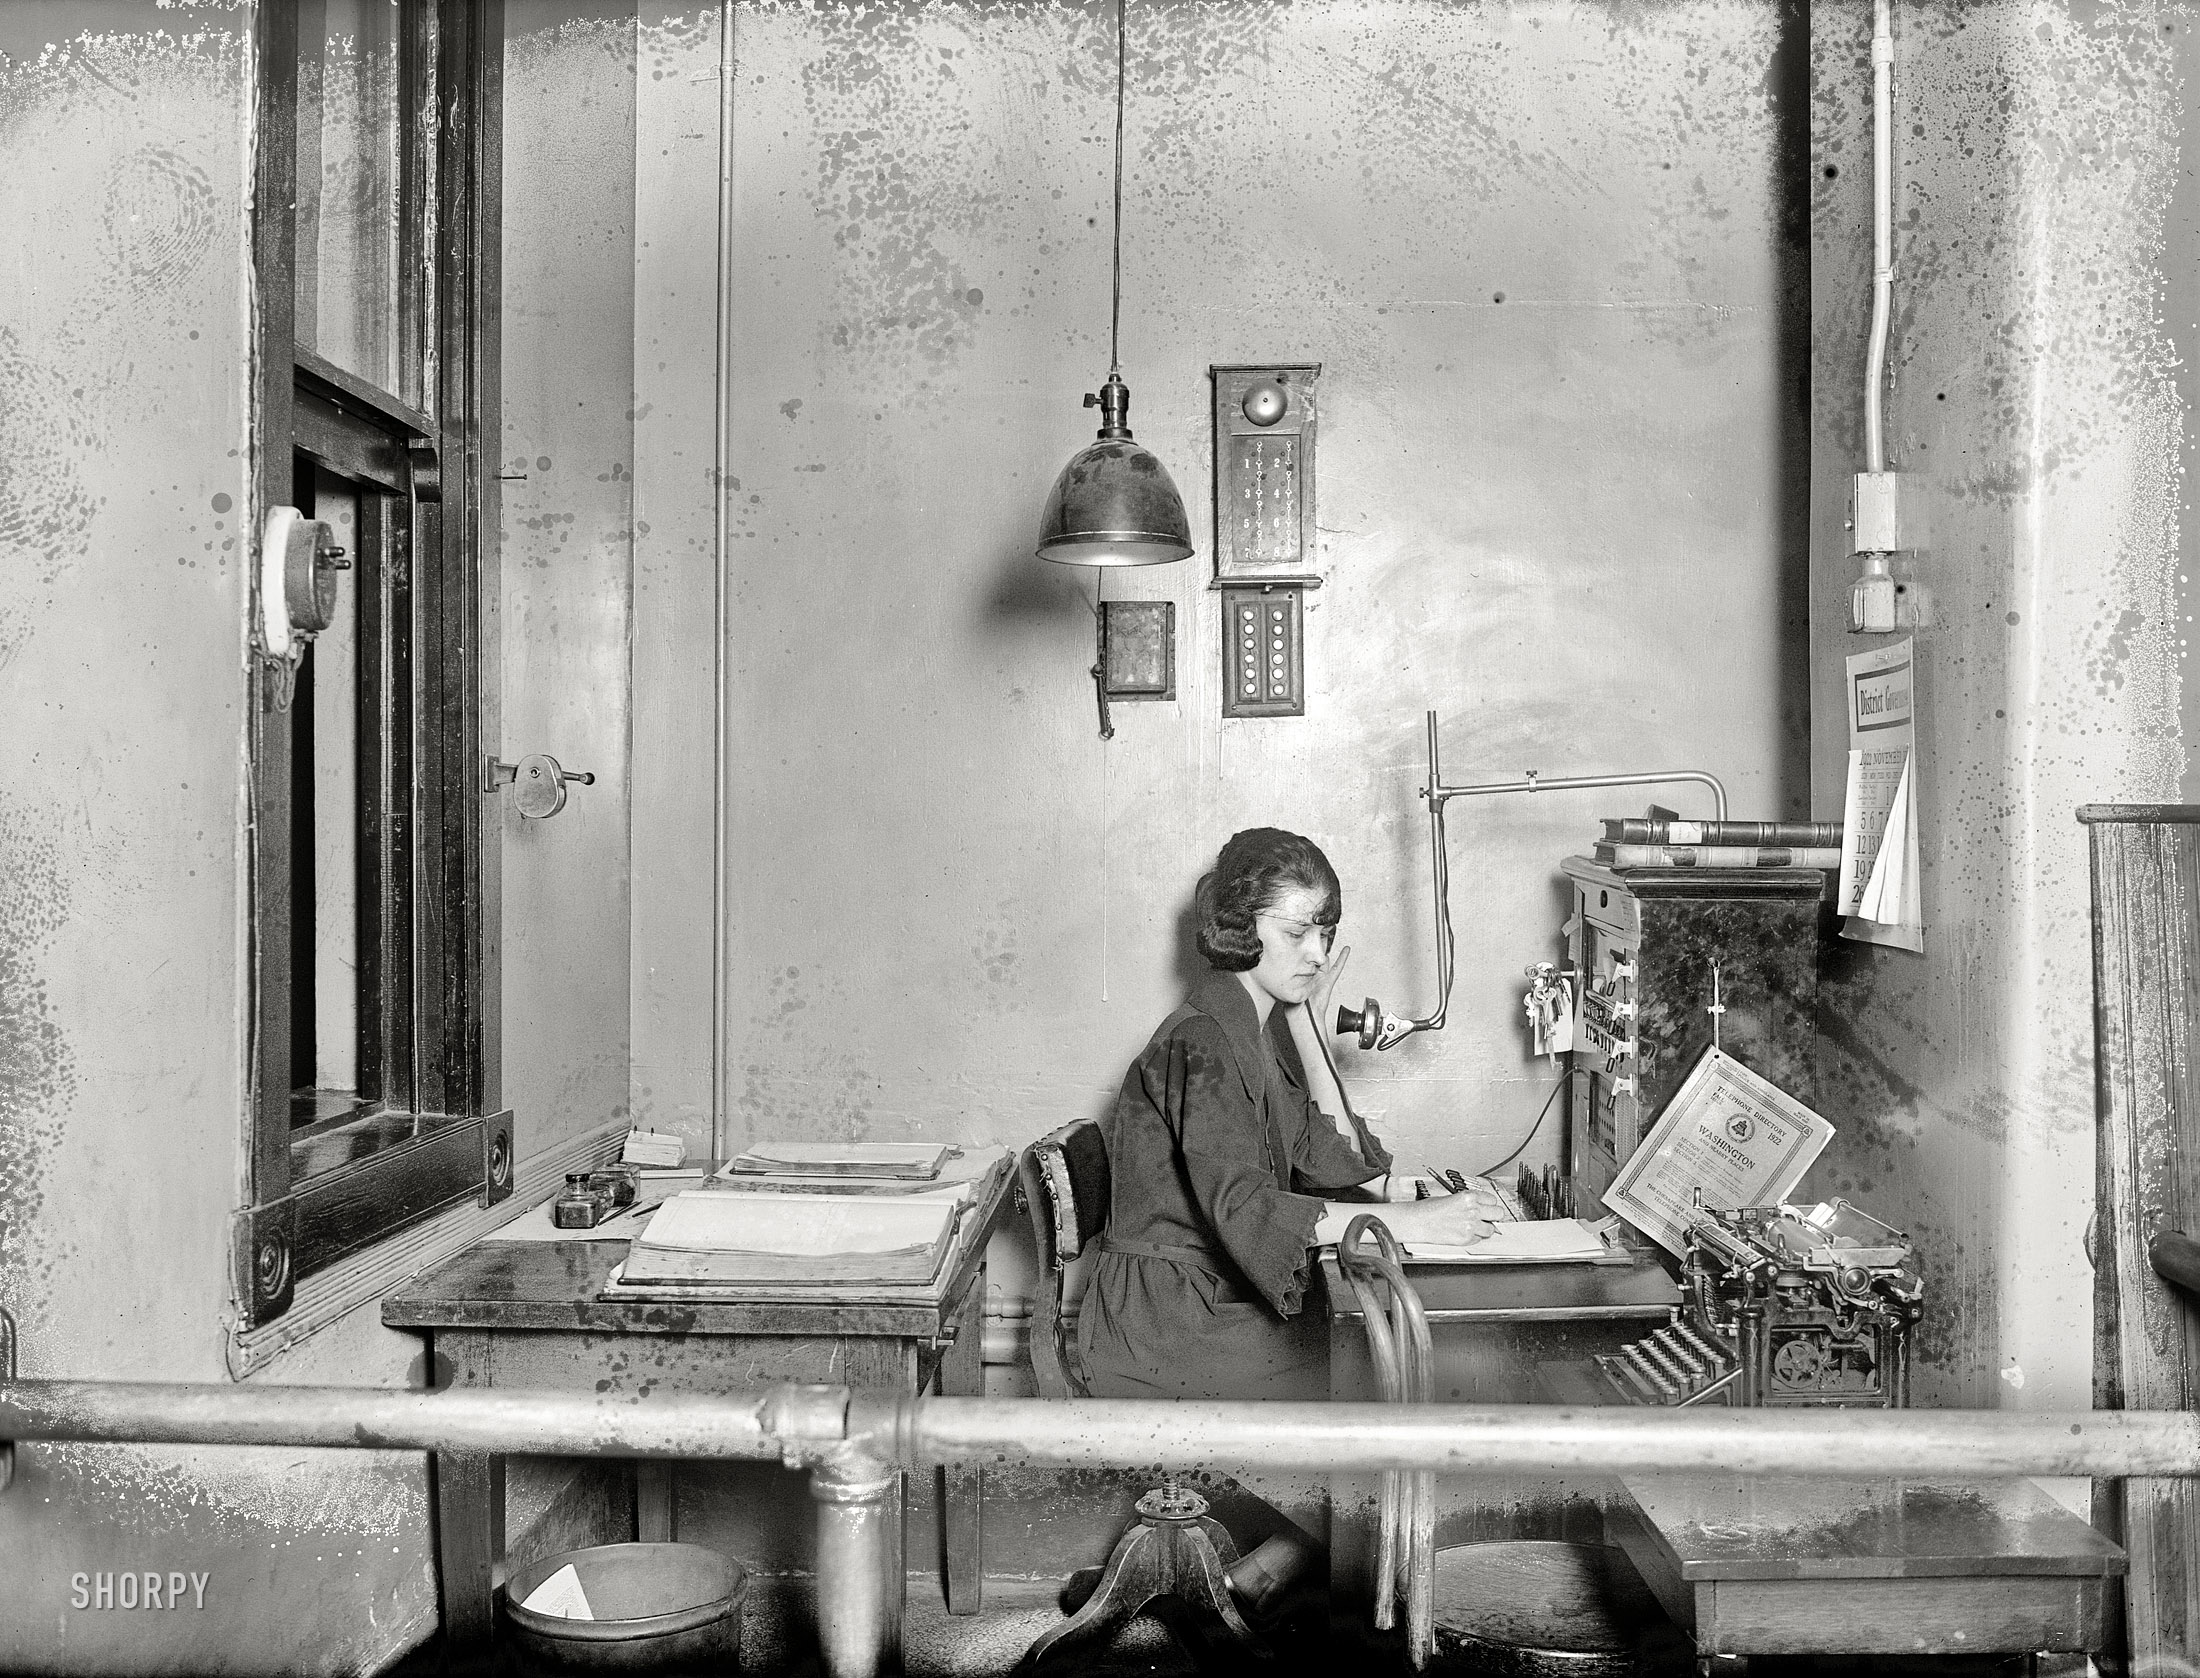 November 1922. Washington, D.C. "Woman's Bureau, Metropolitan Police Dep't. Telephone calls bring prompt attention." National Photo Co. View full size.